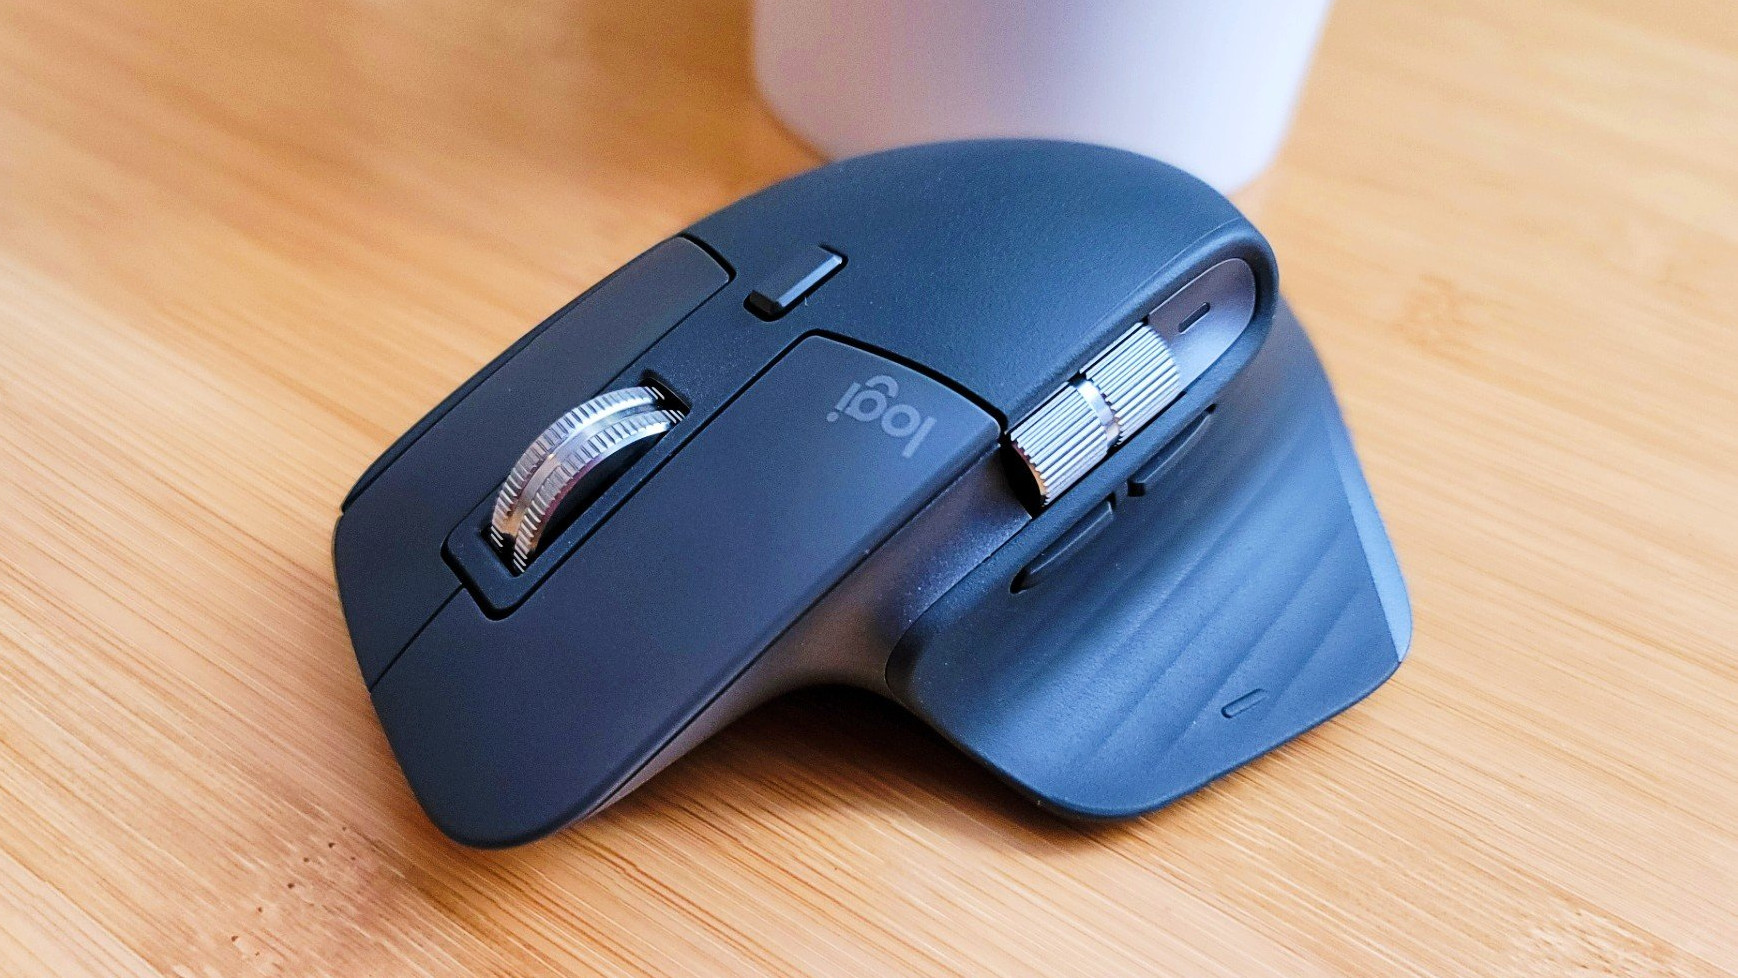 Logitech Gaming Mouse G203 LIGHTSYNC - mouse - USB - black - 910-005790 -  Mice - CDW.ca